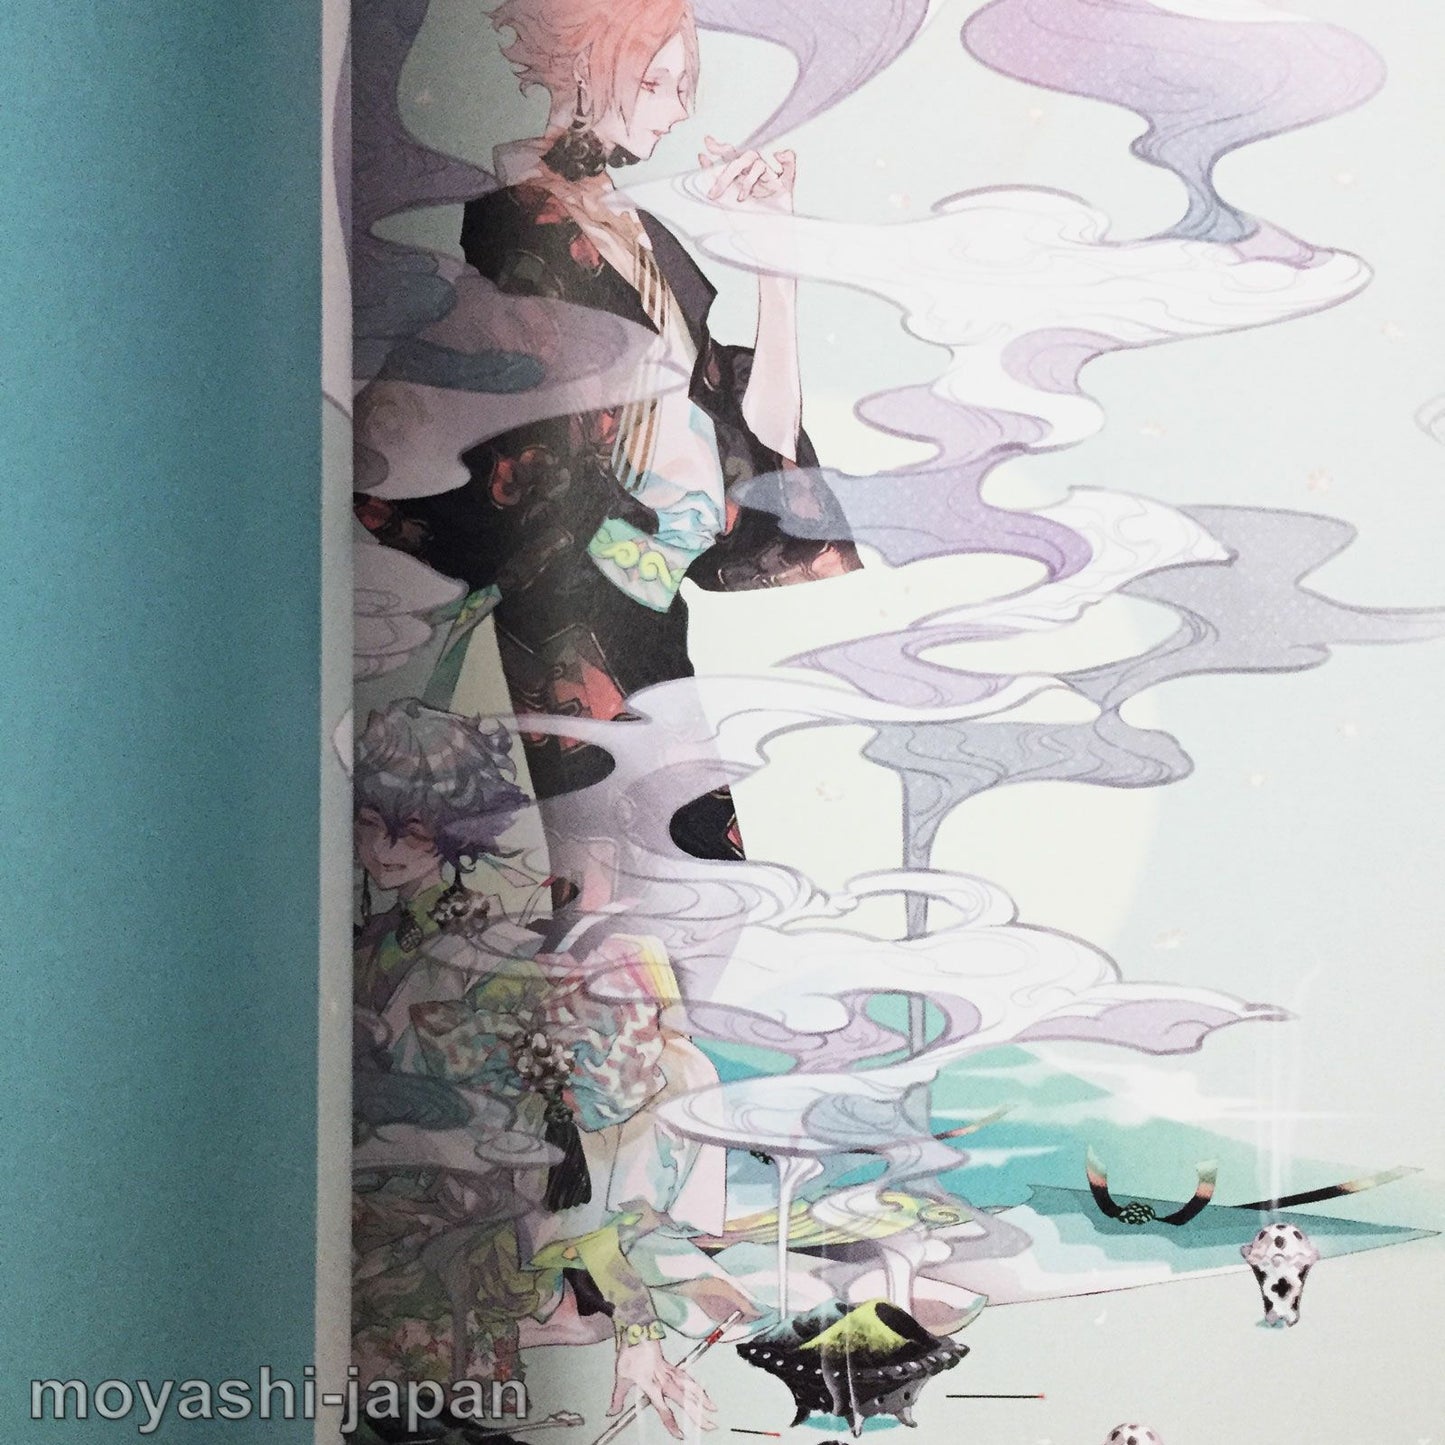 Honojiro Towoji Illustration Works "ShiroShirojiro"